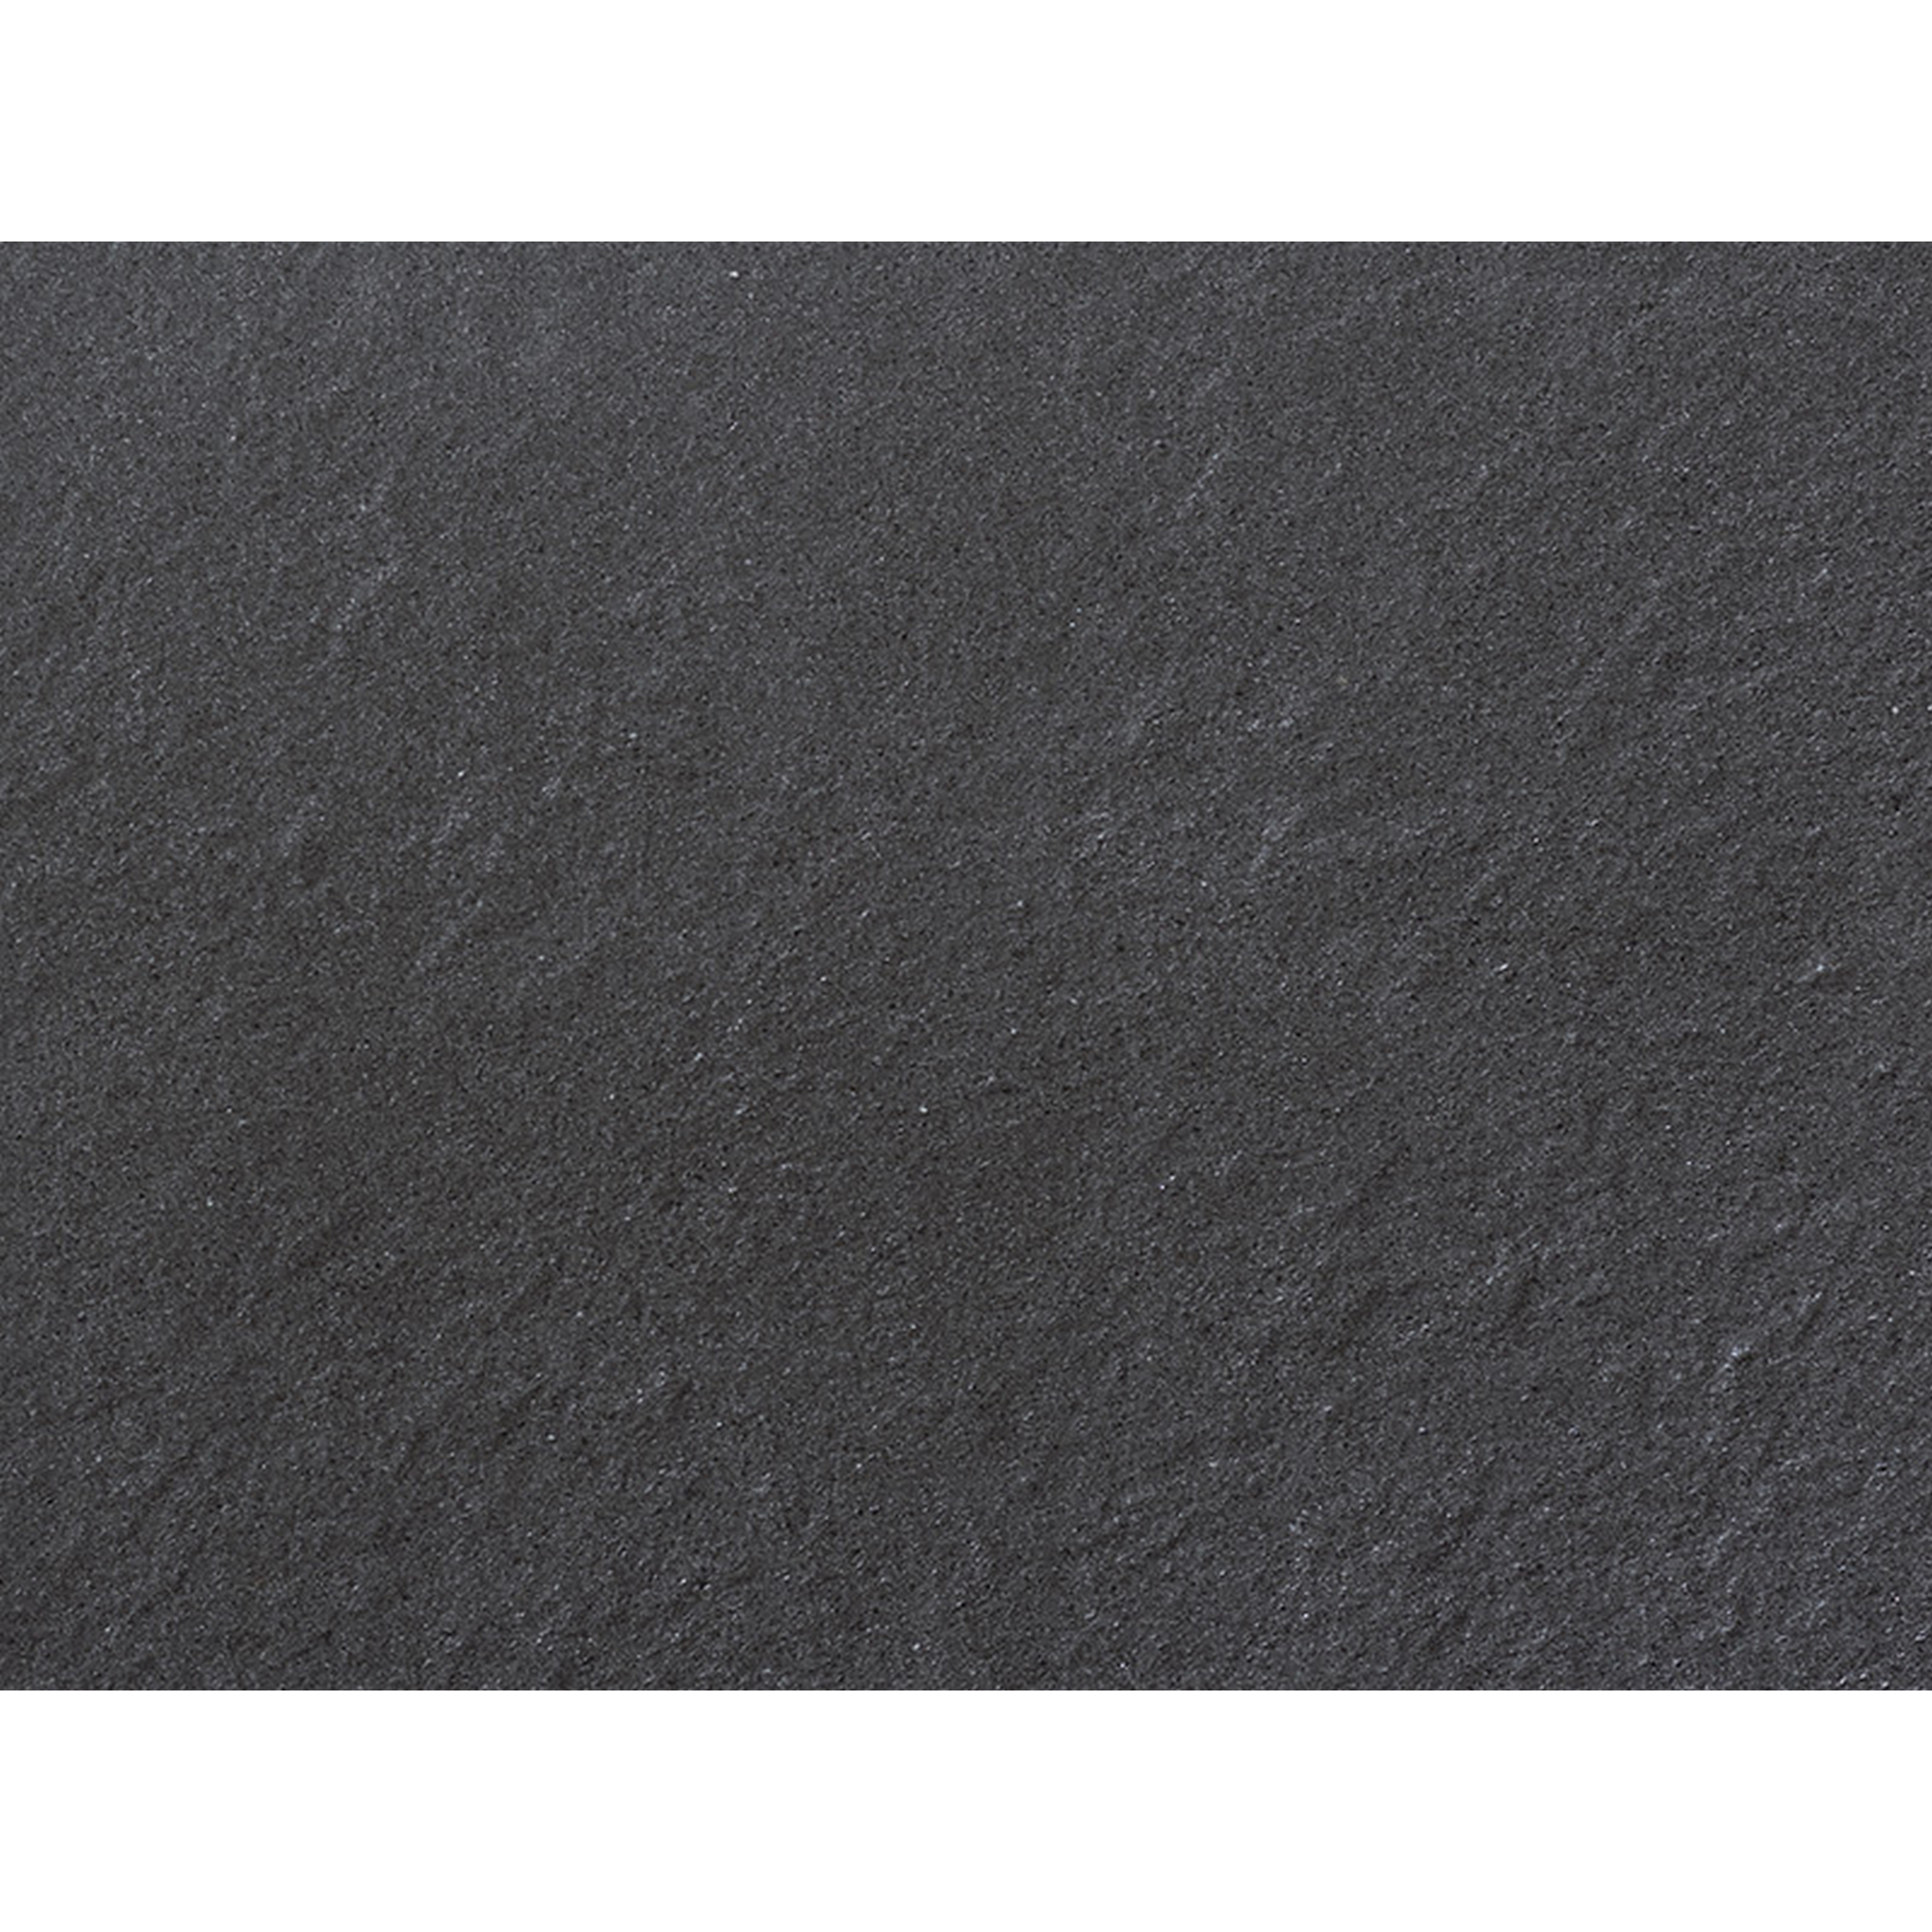 Terrassenplatte 'T-Court Selection' Beton basaltfarben 60 x 40 x 4 cm + product picture